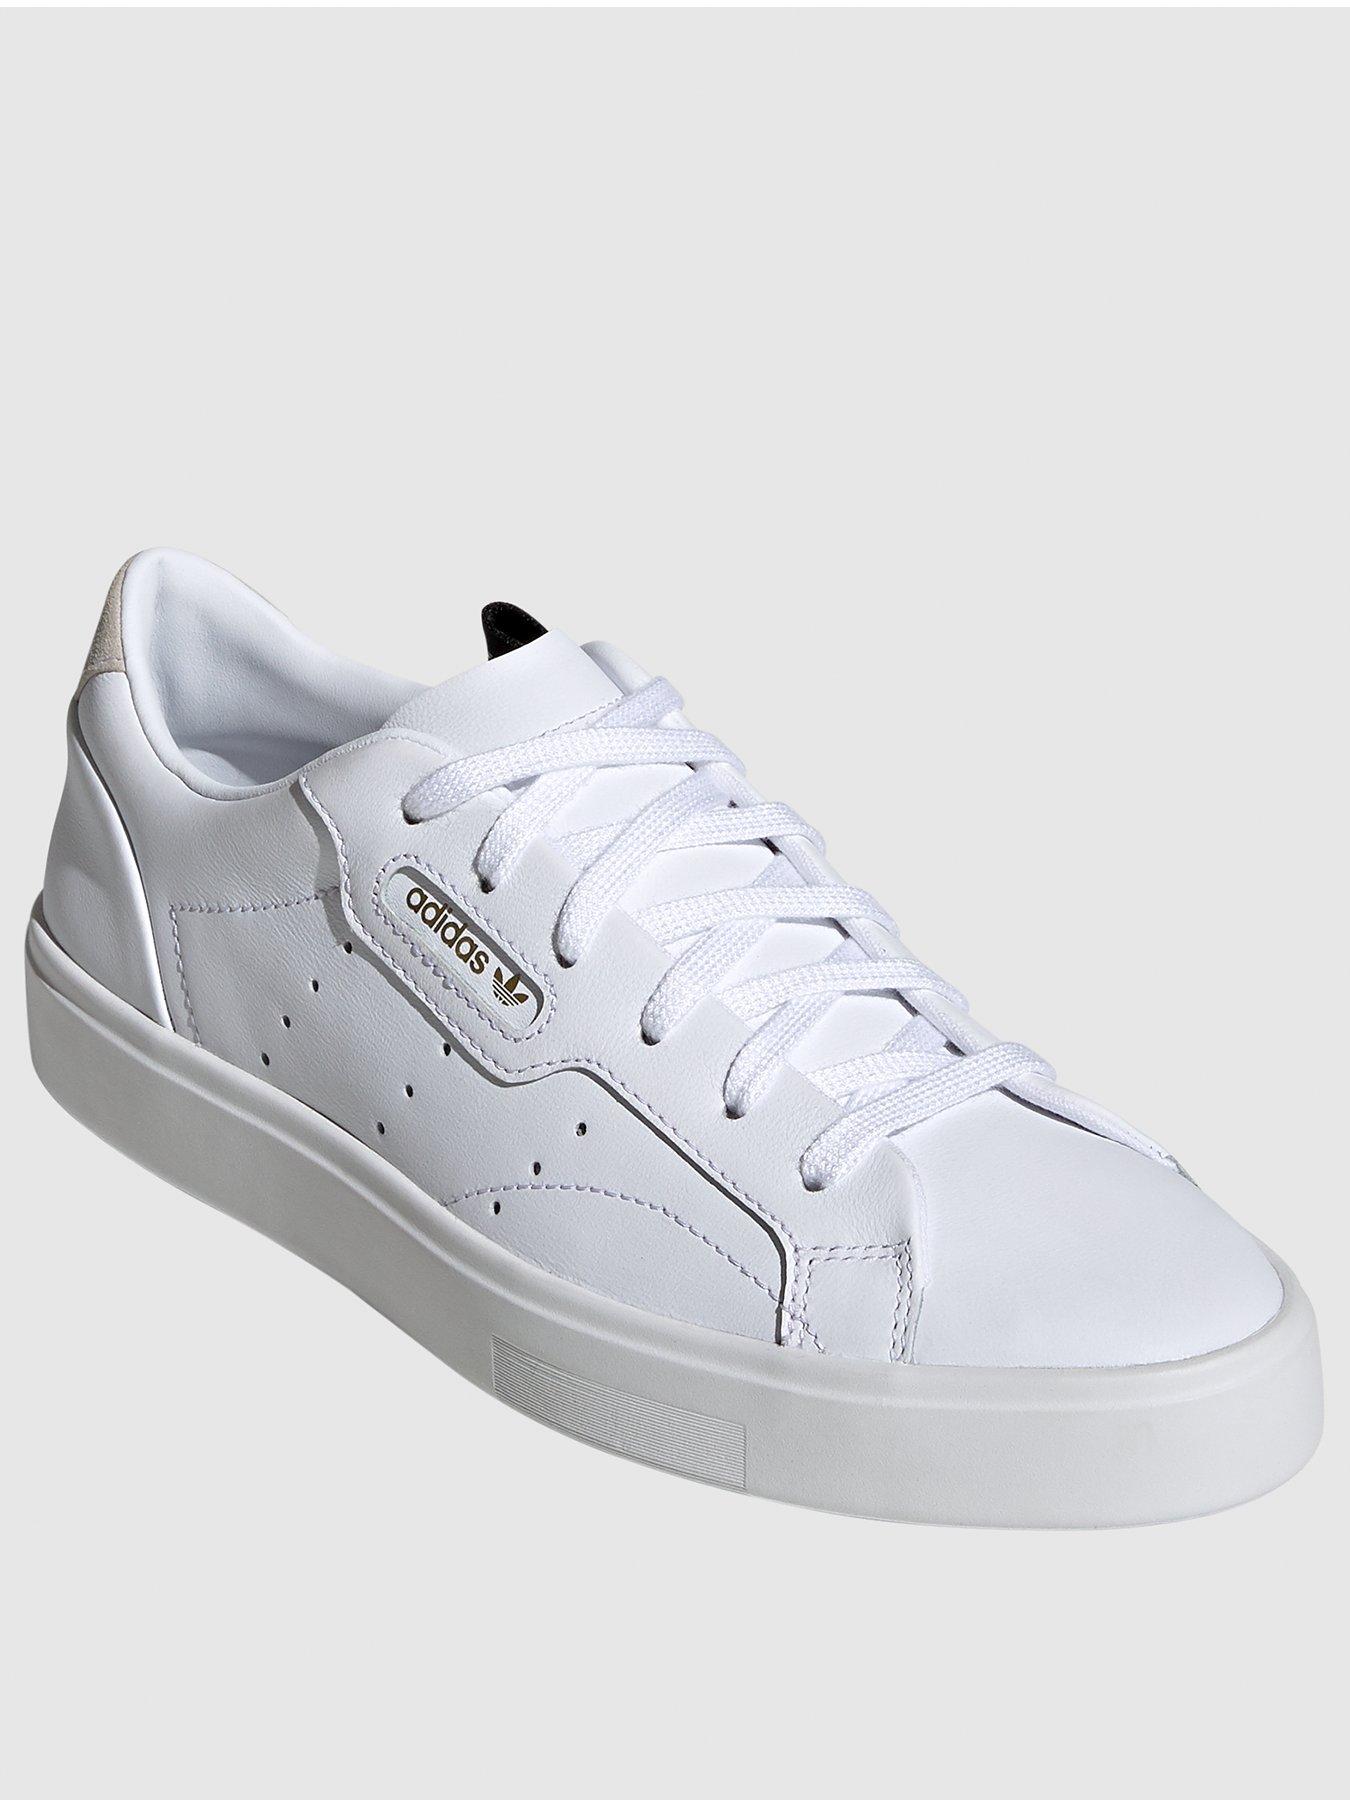 adidas Originals Sleek - White 